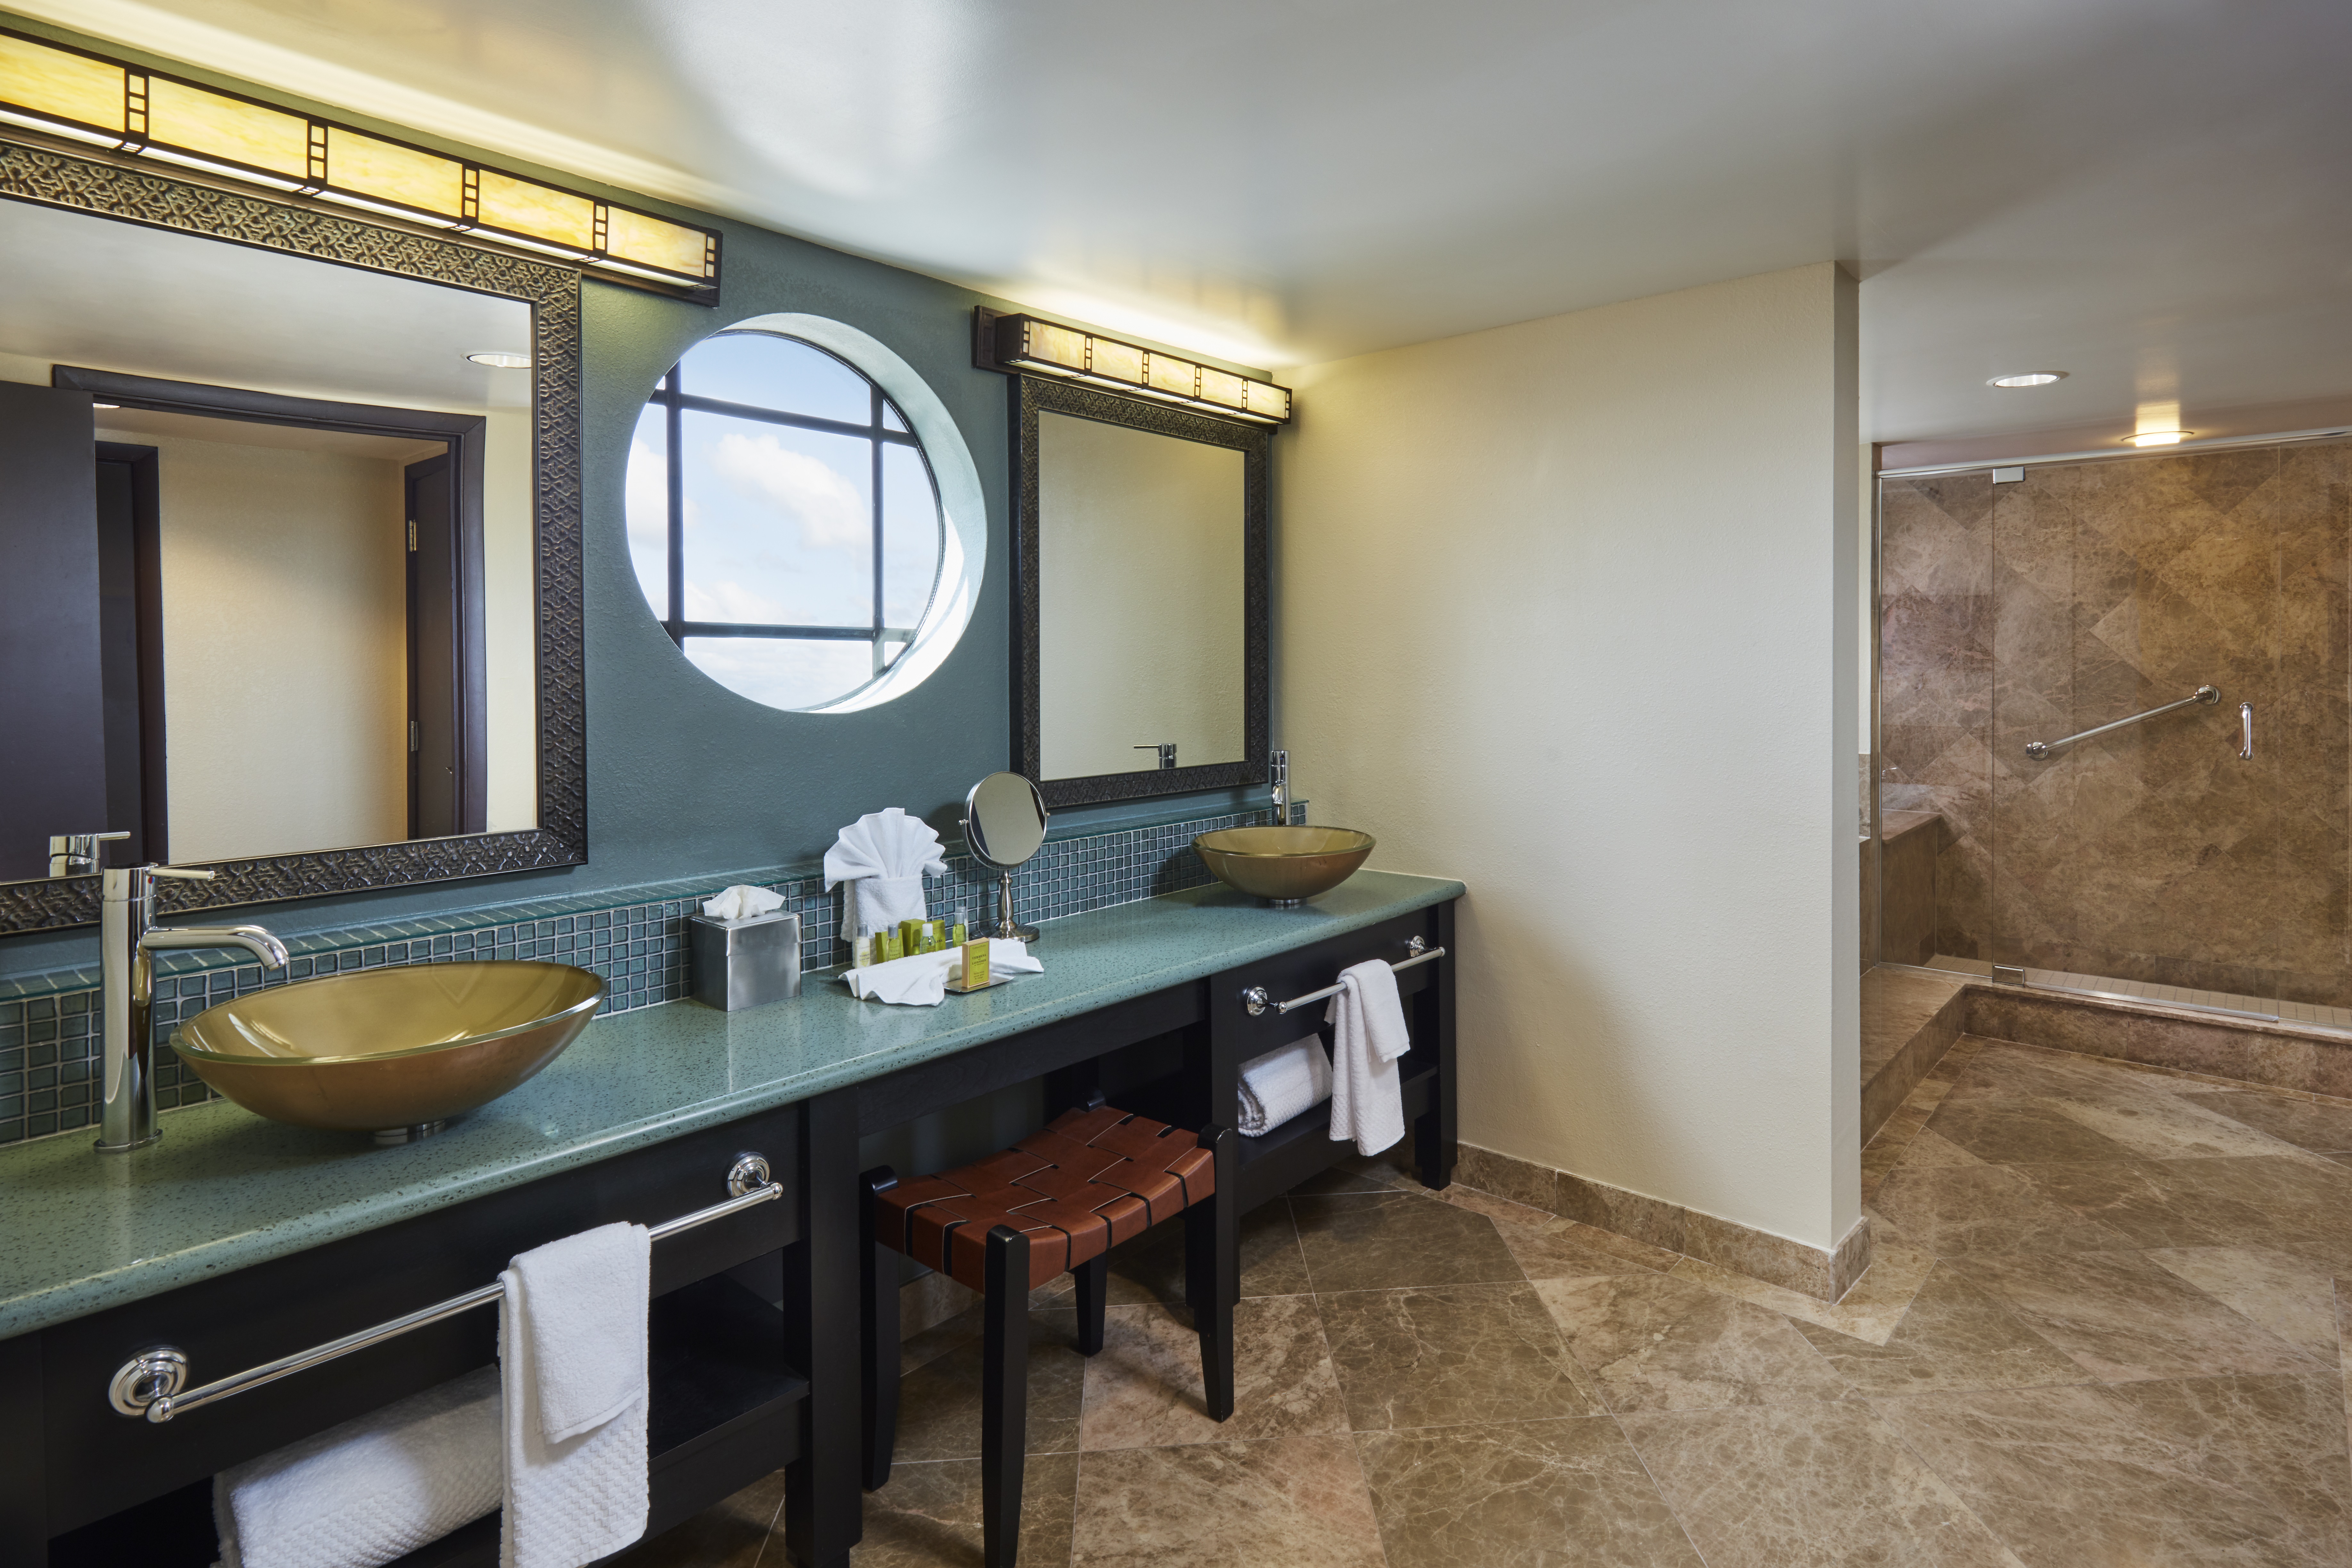 Presidential Suite Bathroom with Double Vanity